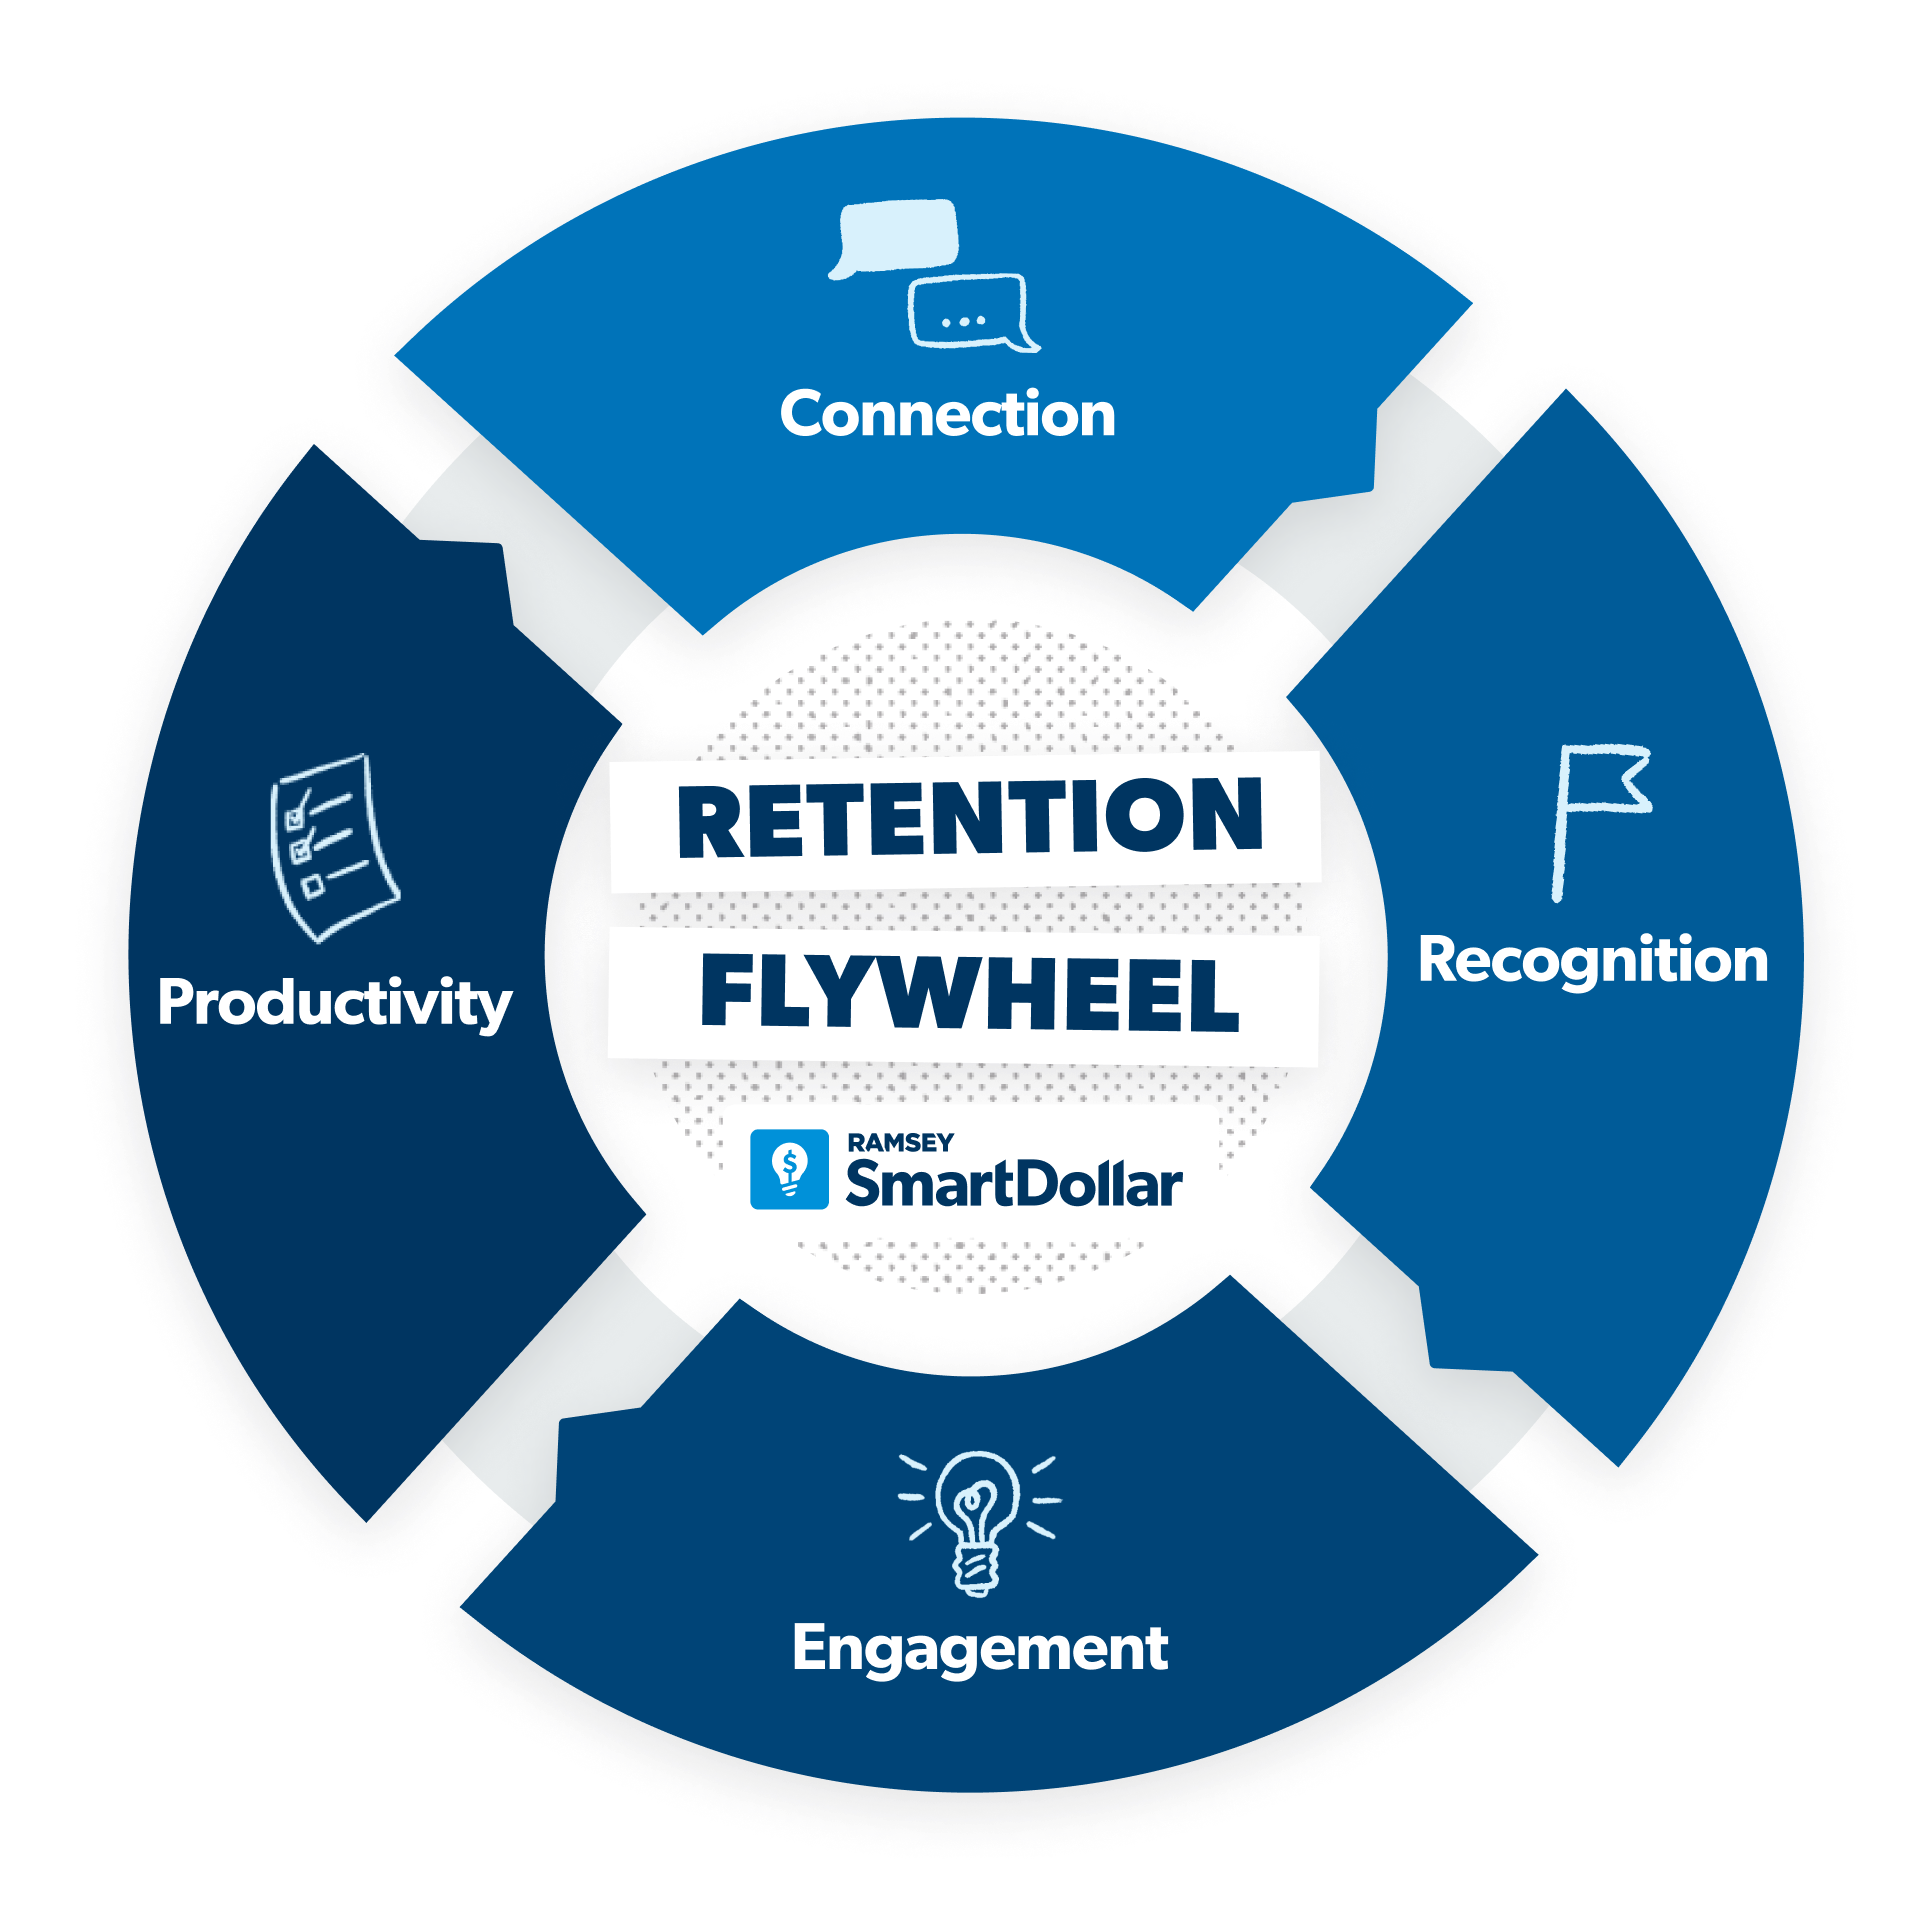 The Retention Flywheel